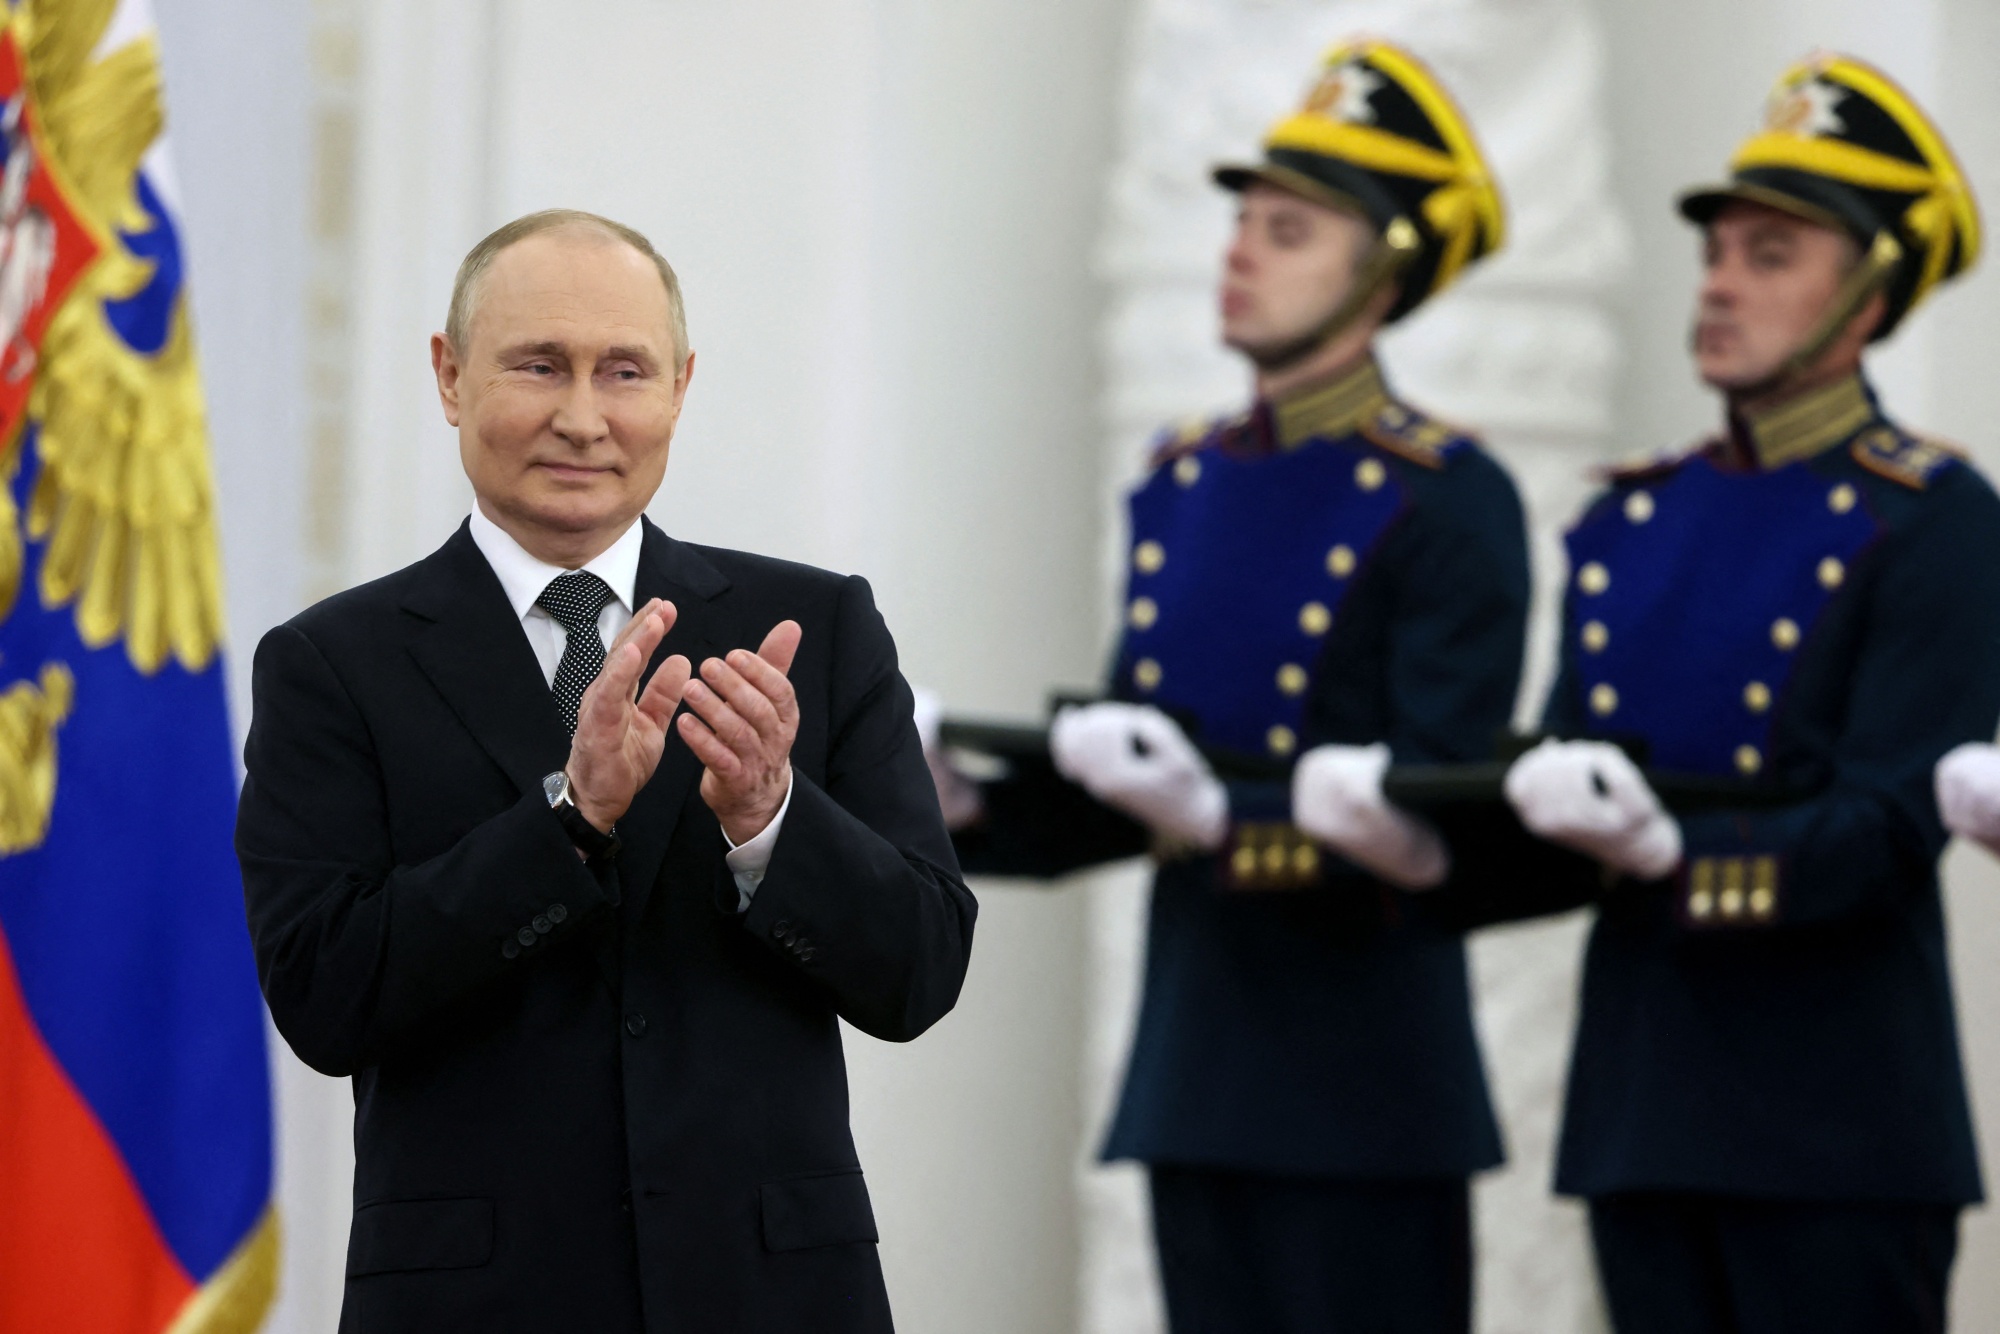 RussiaUkraine War Putin Is Winning But the US and Europe Must Act